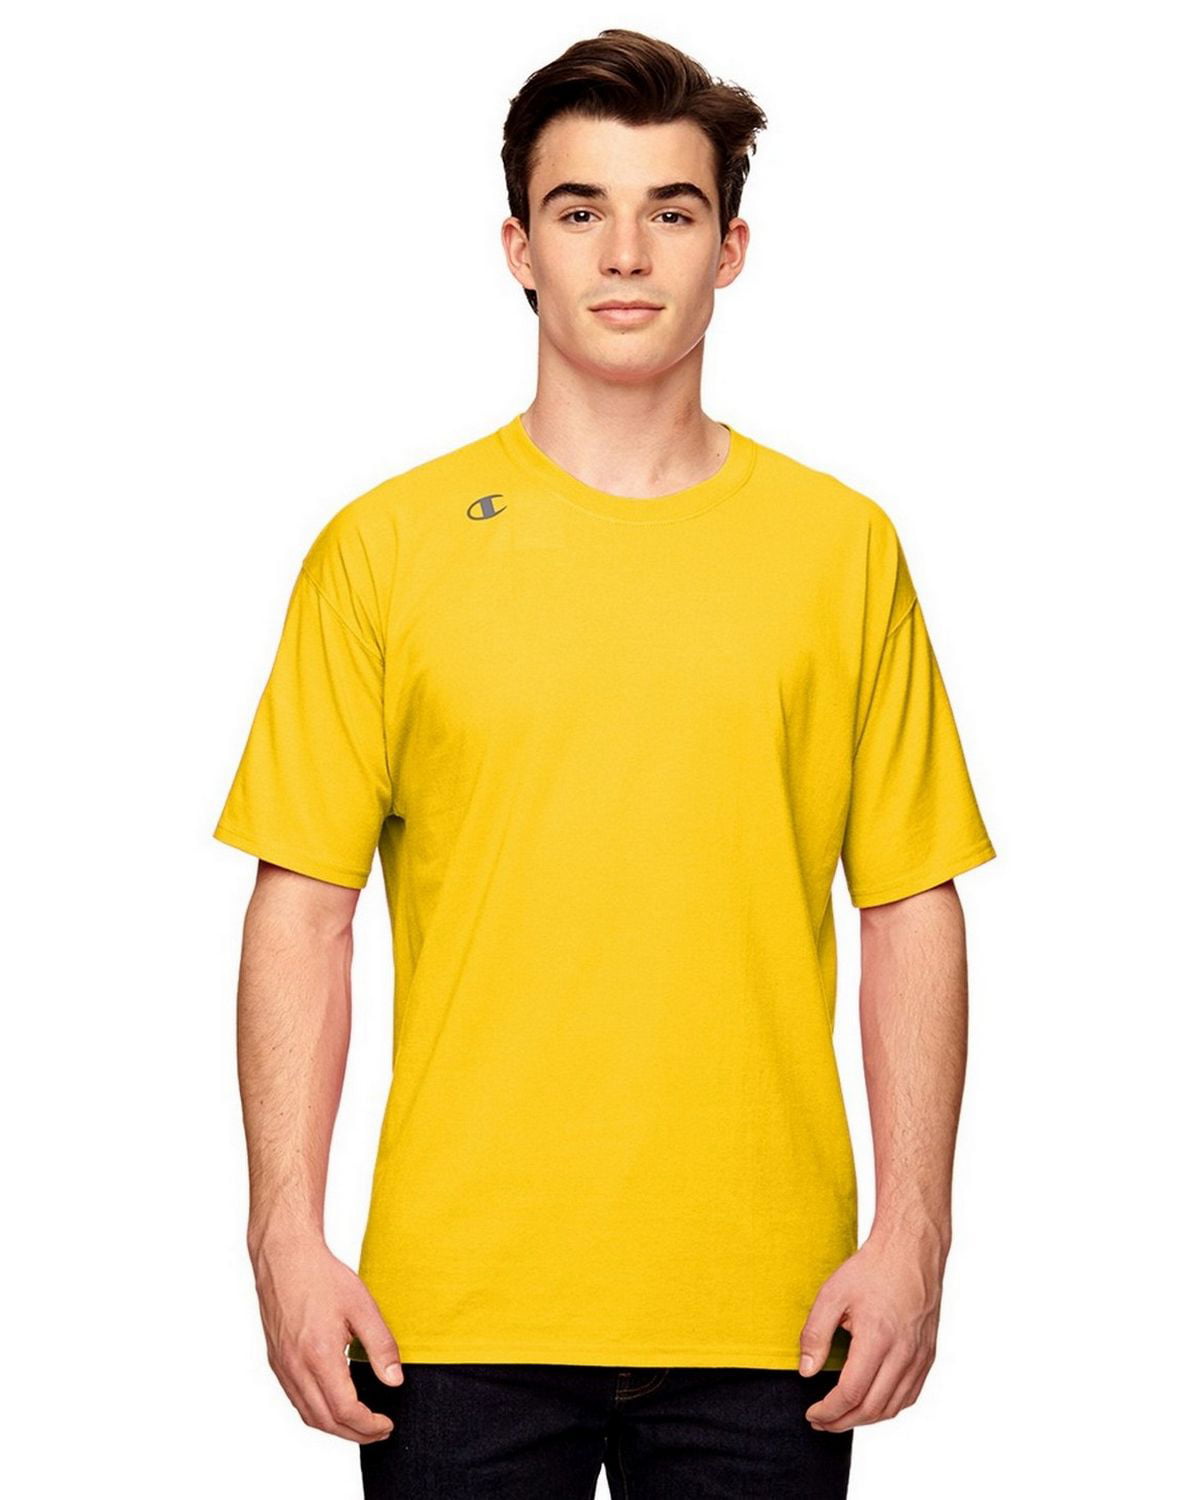 Champion T-Shirt T380 Men's Vapor Cotton Short-Sleeve NEW